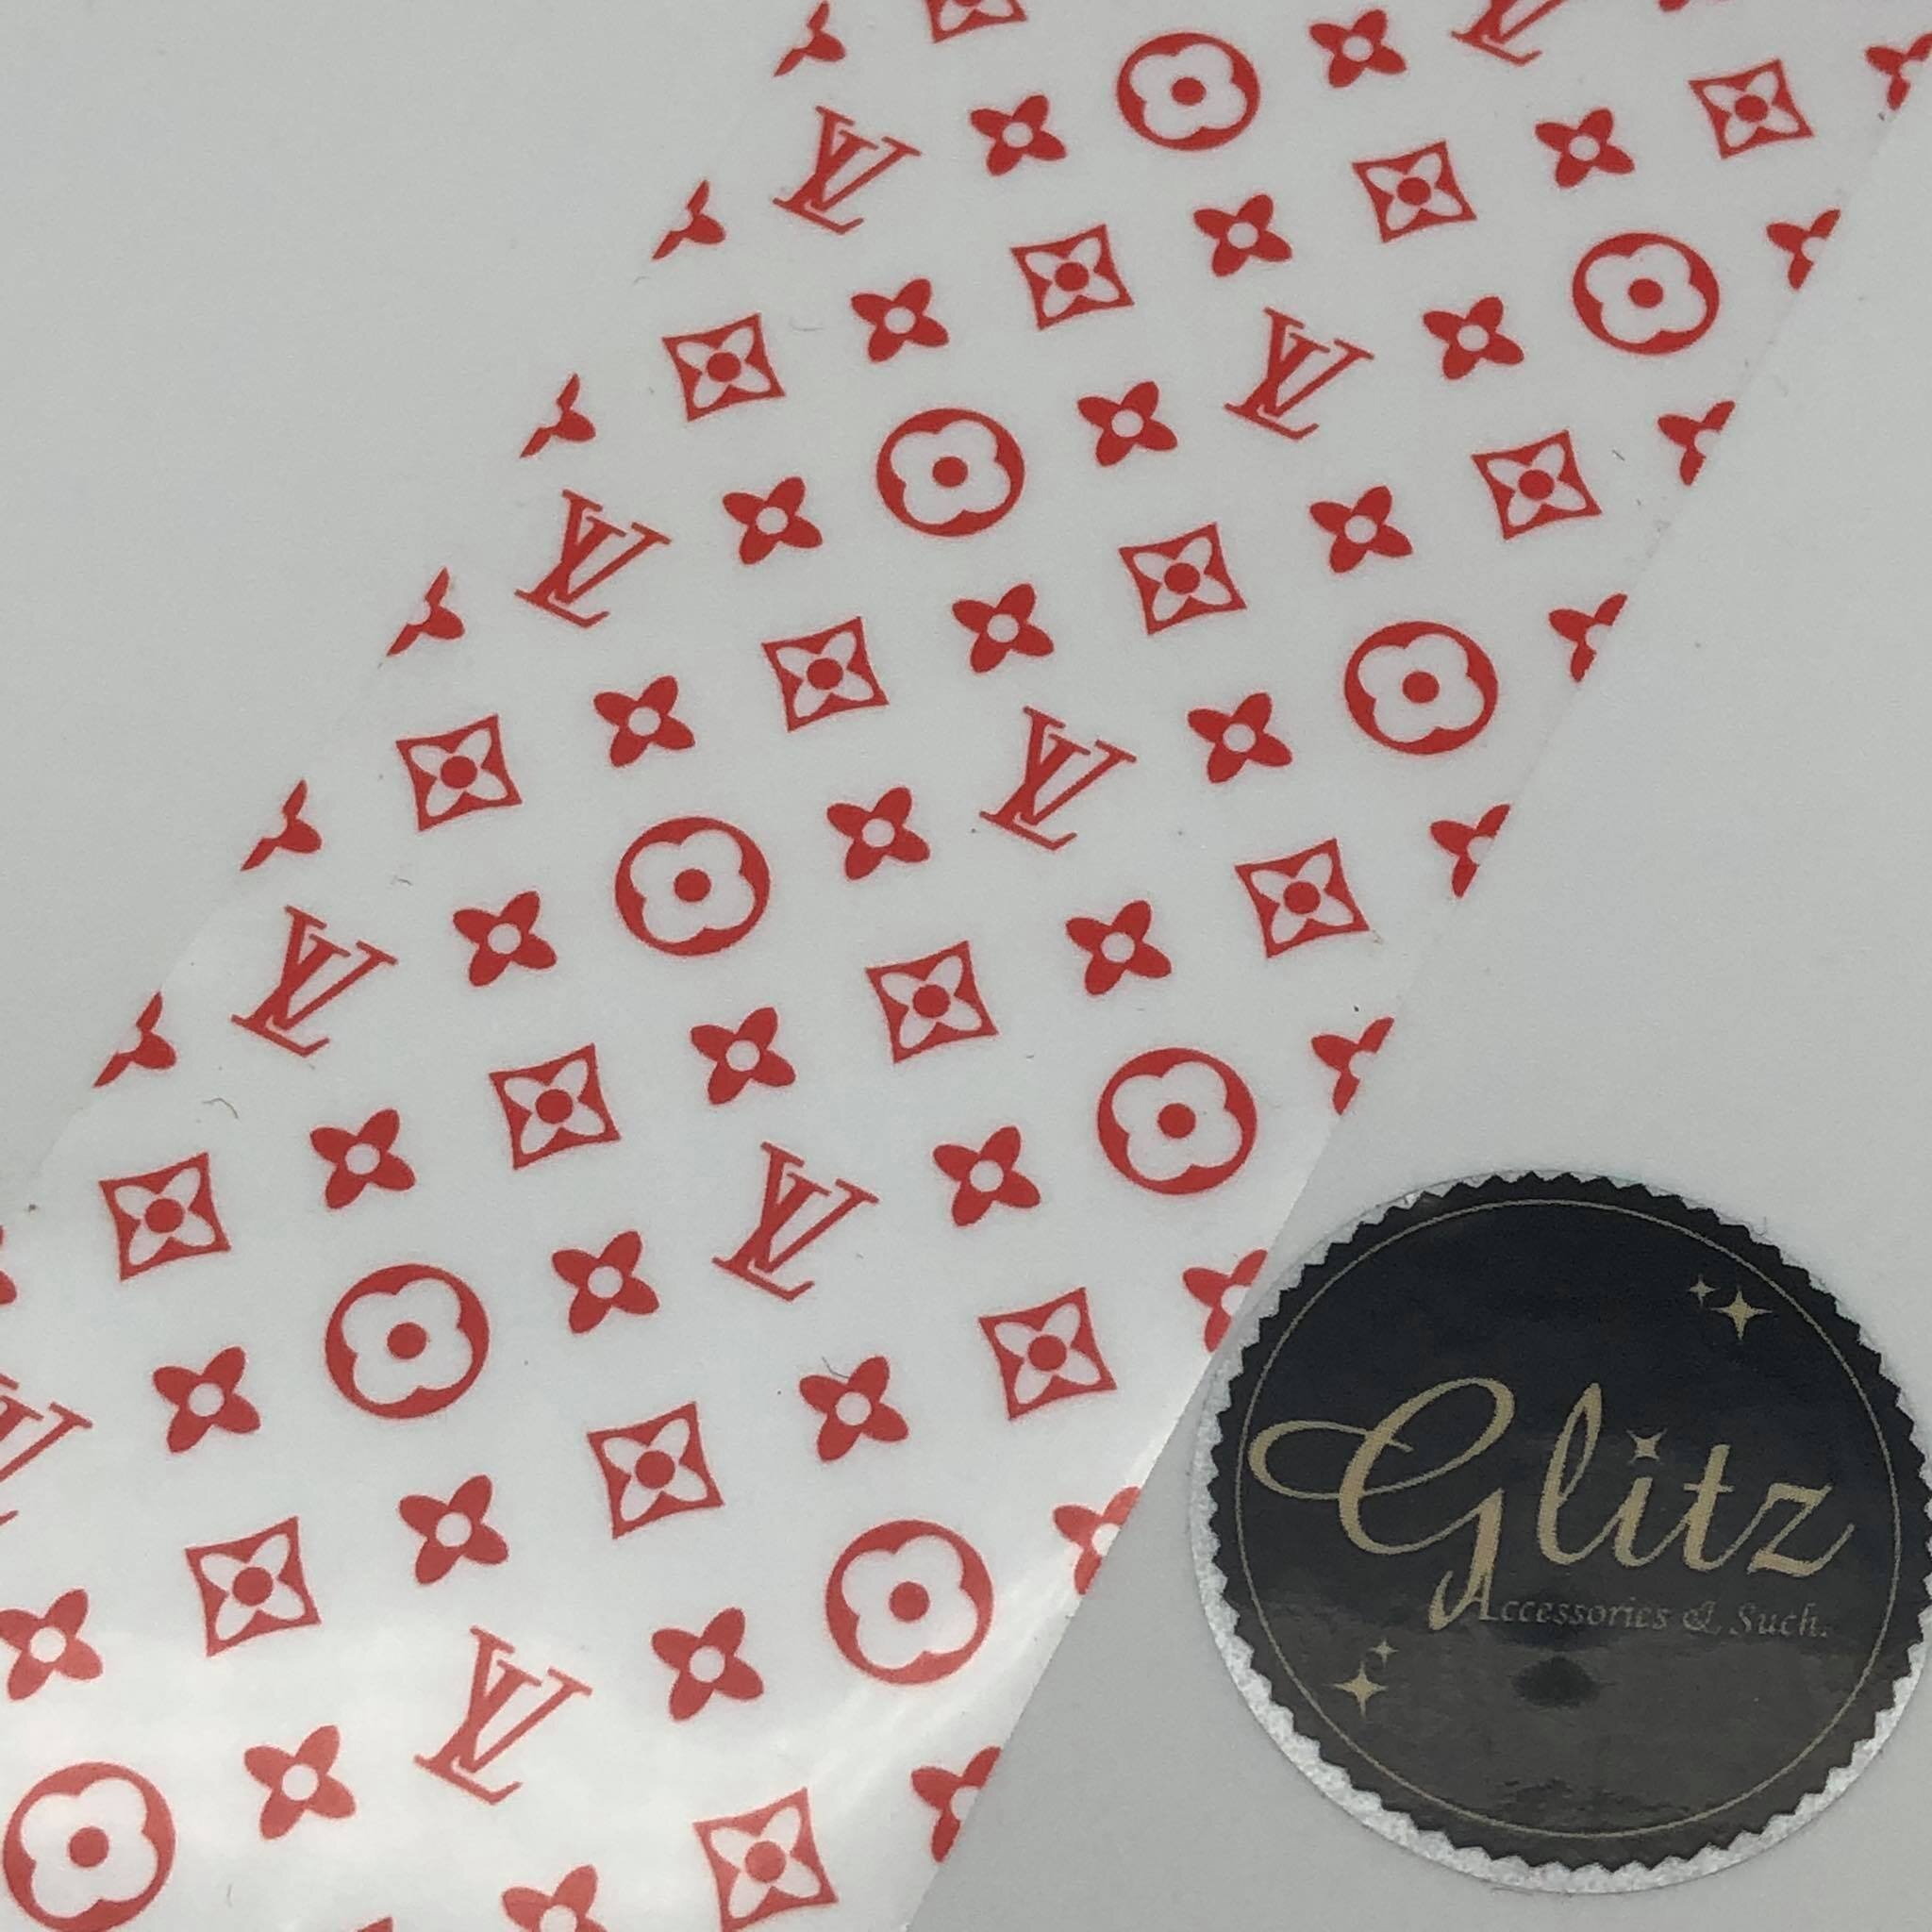 Louis Series - Transfer Foil Single — Glitz Accessories & Such.